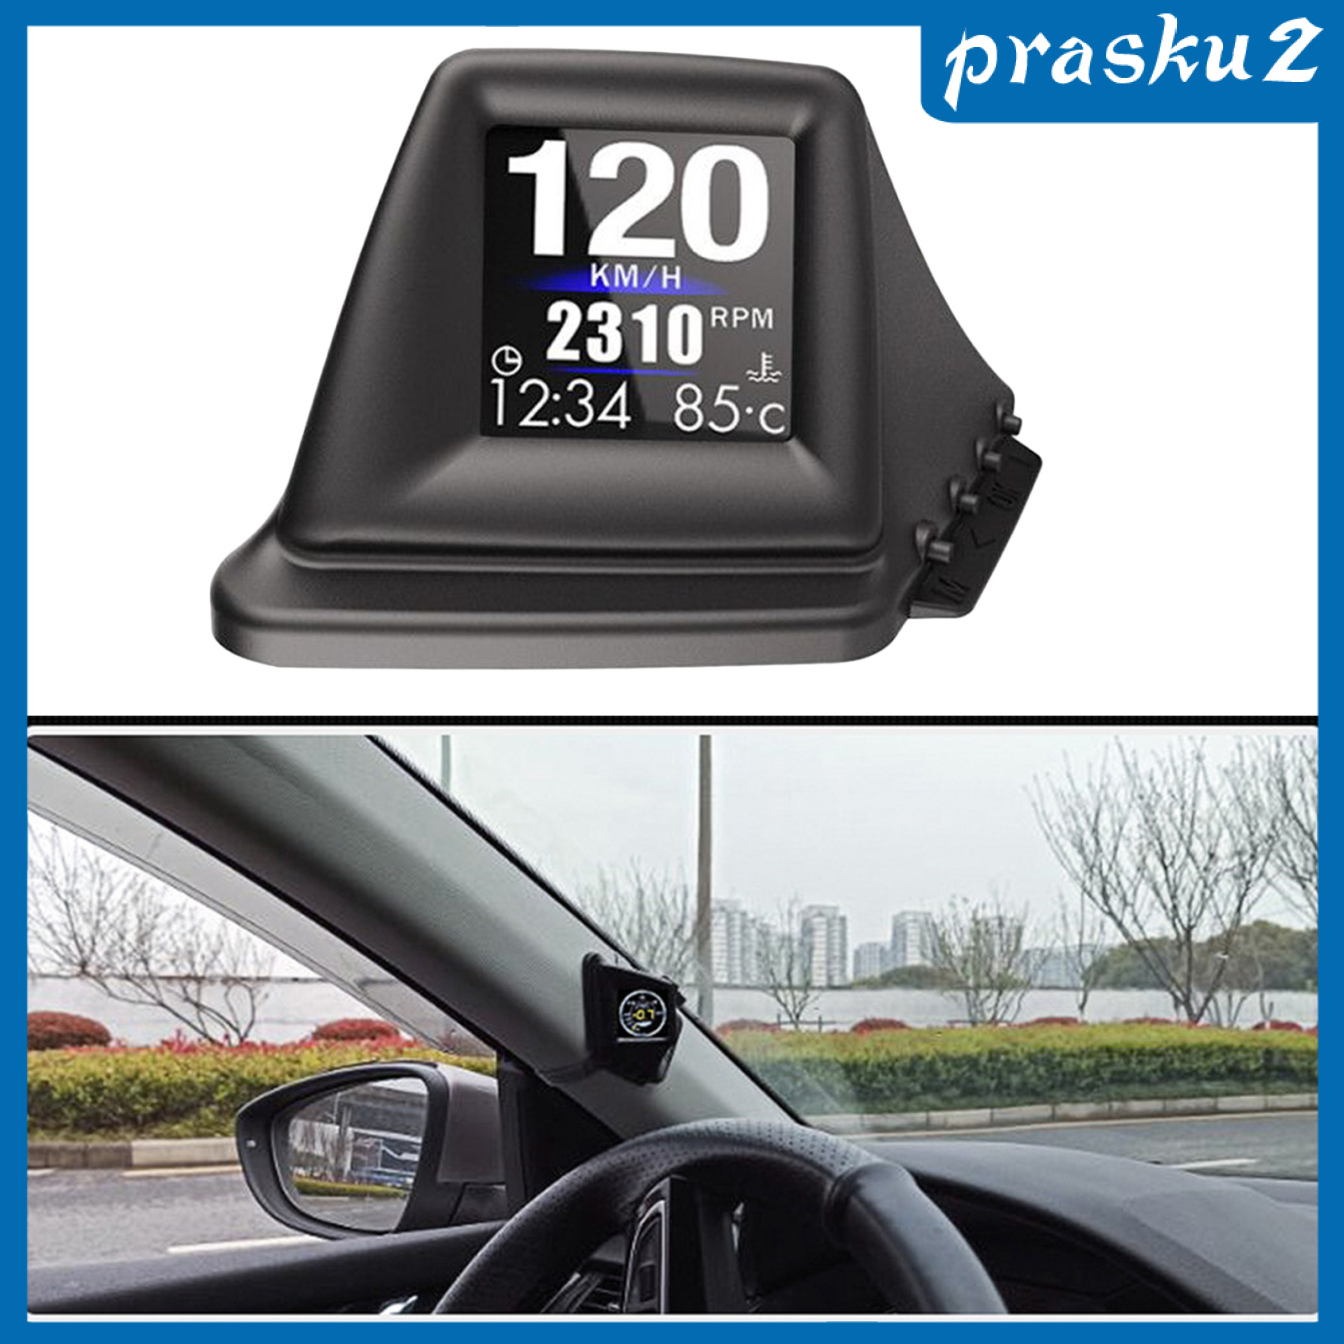 [PRASKU2]Car Head Up Display GPS OBD2 OBD Driving Computer Voltmeter LCD Screen